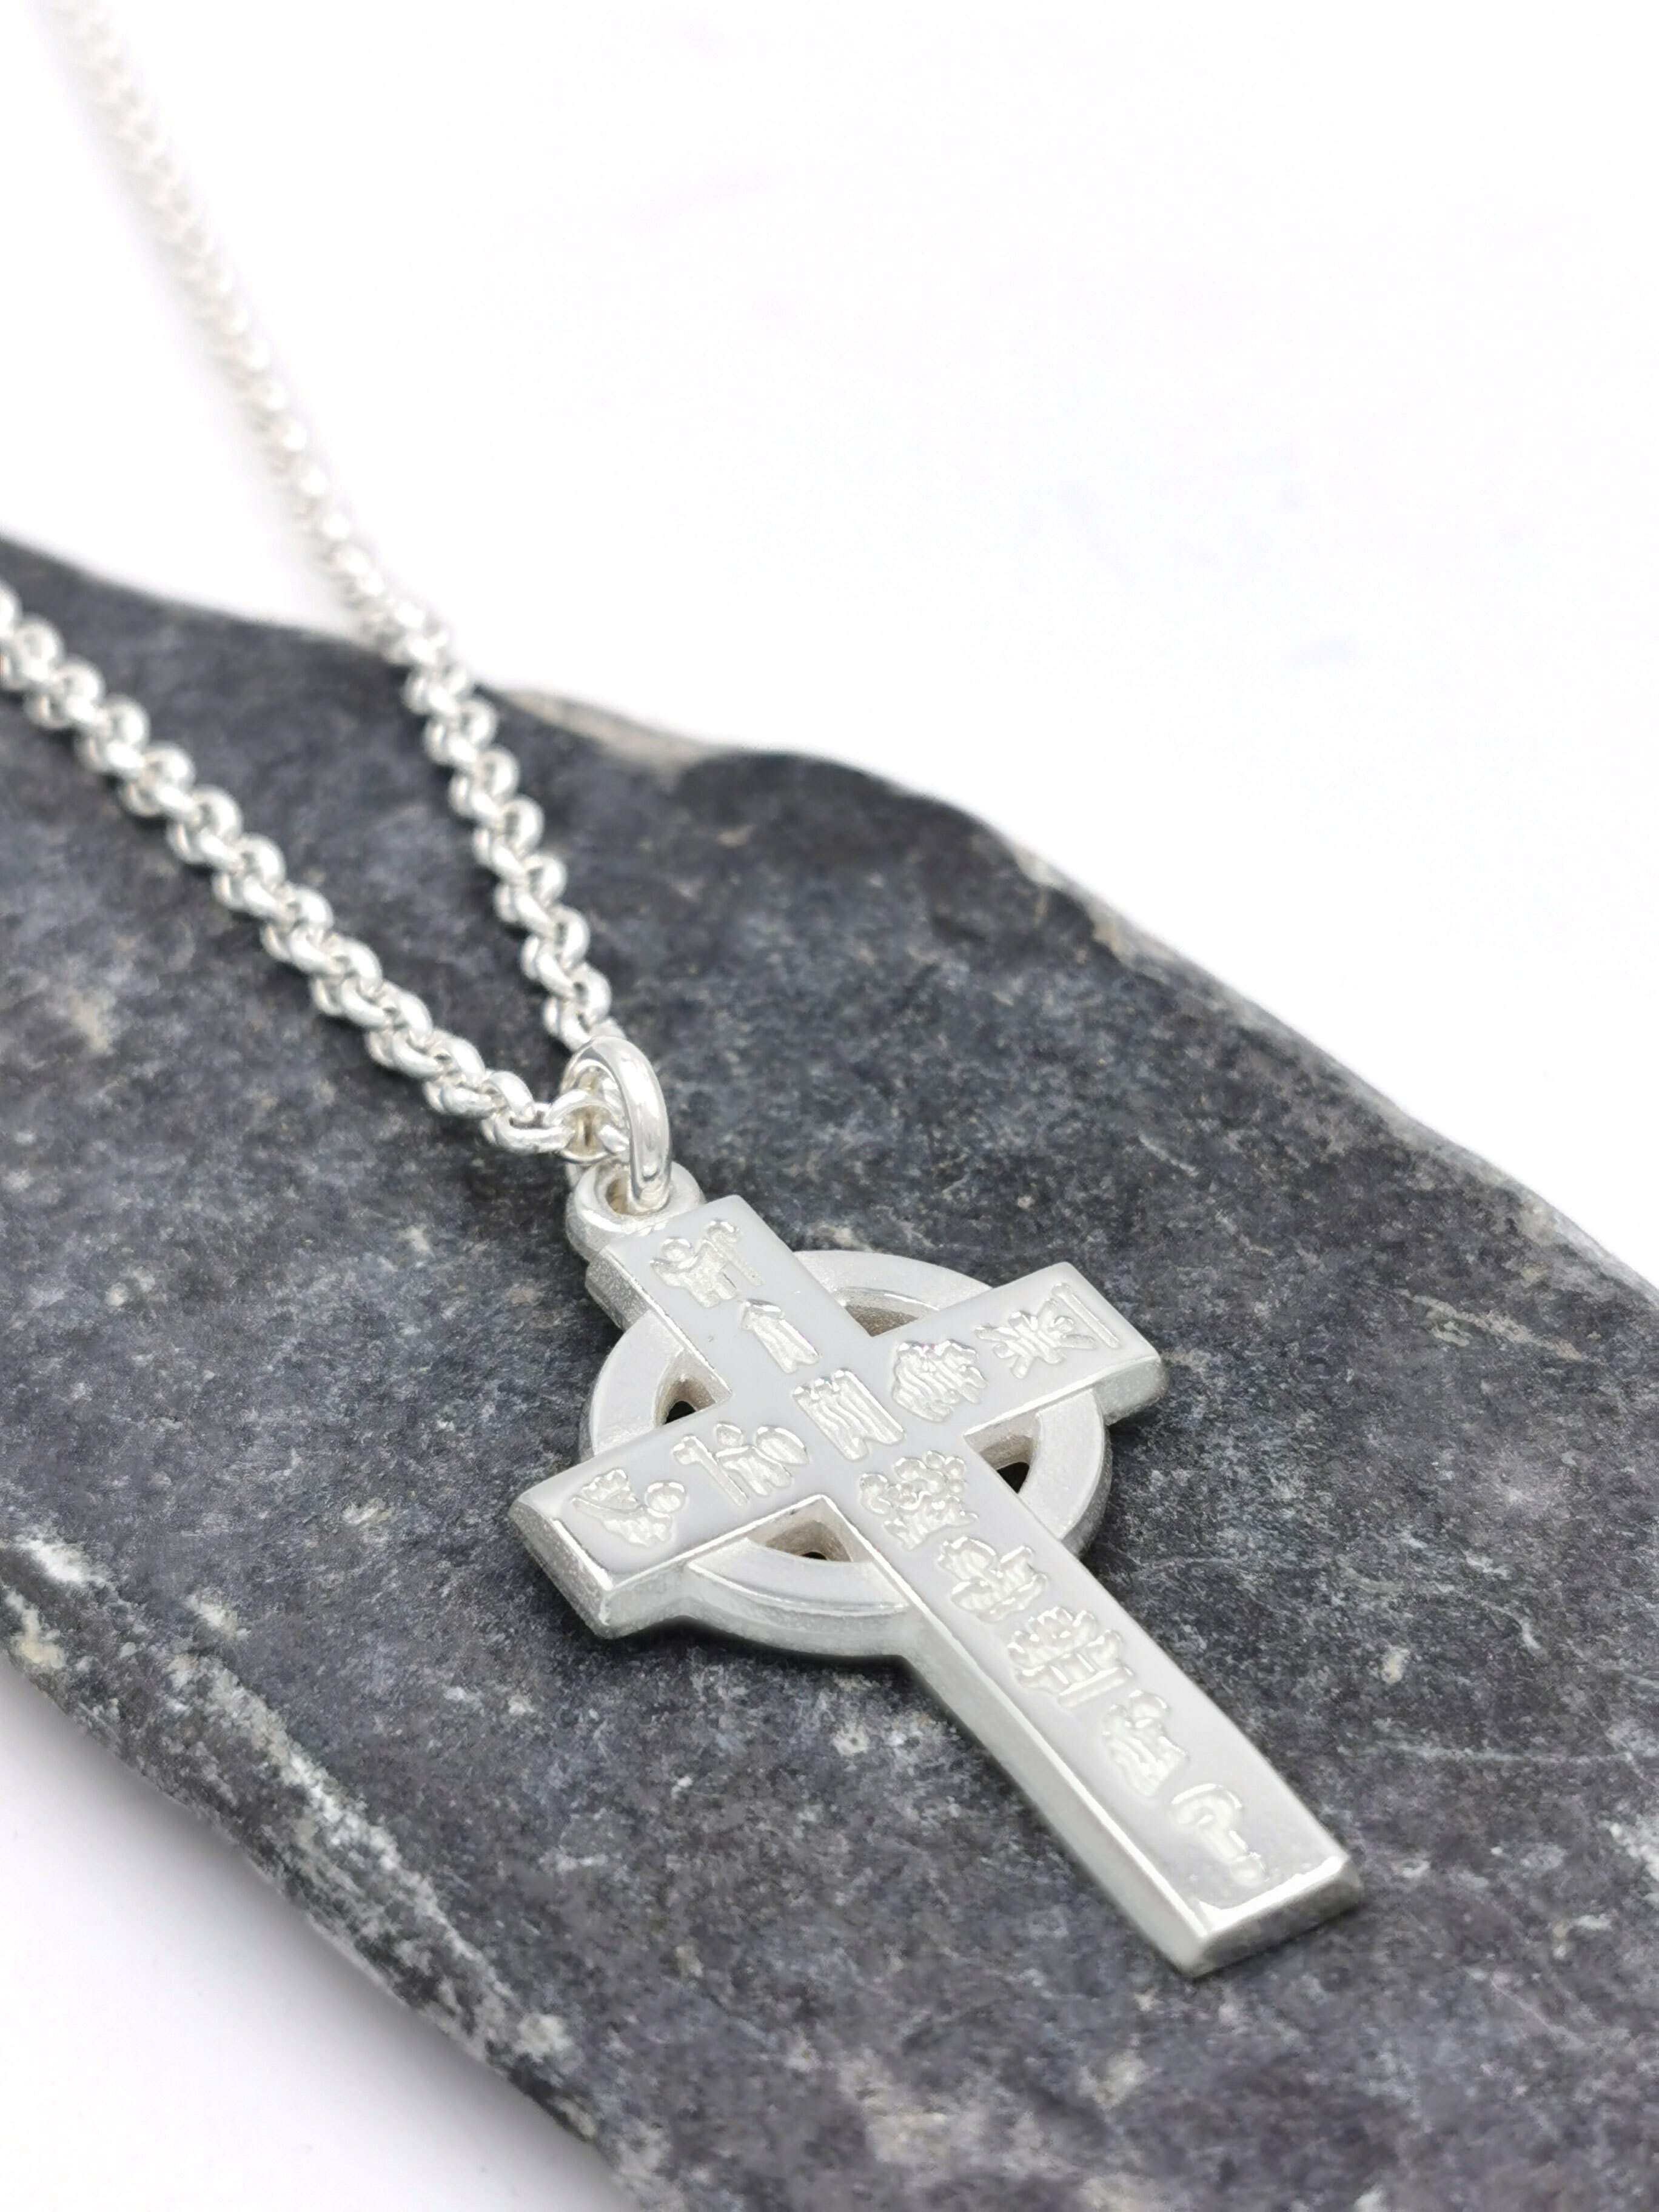 GI JEWELRY - Genuine U.S. Military Issue Ladies Presbyterian Cross